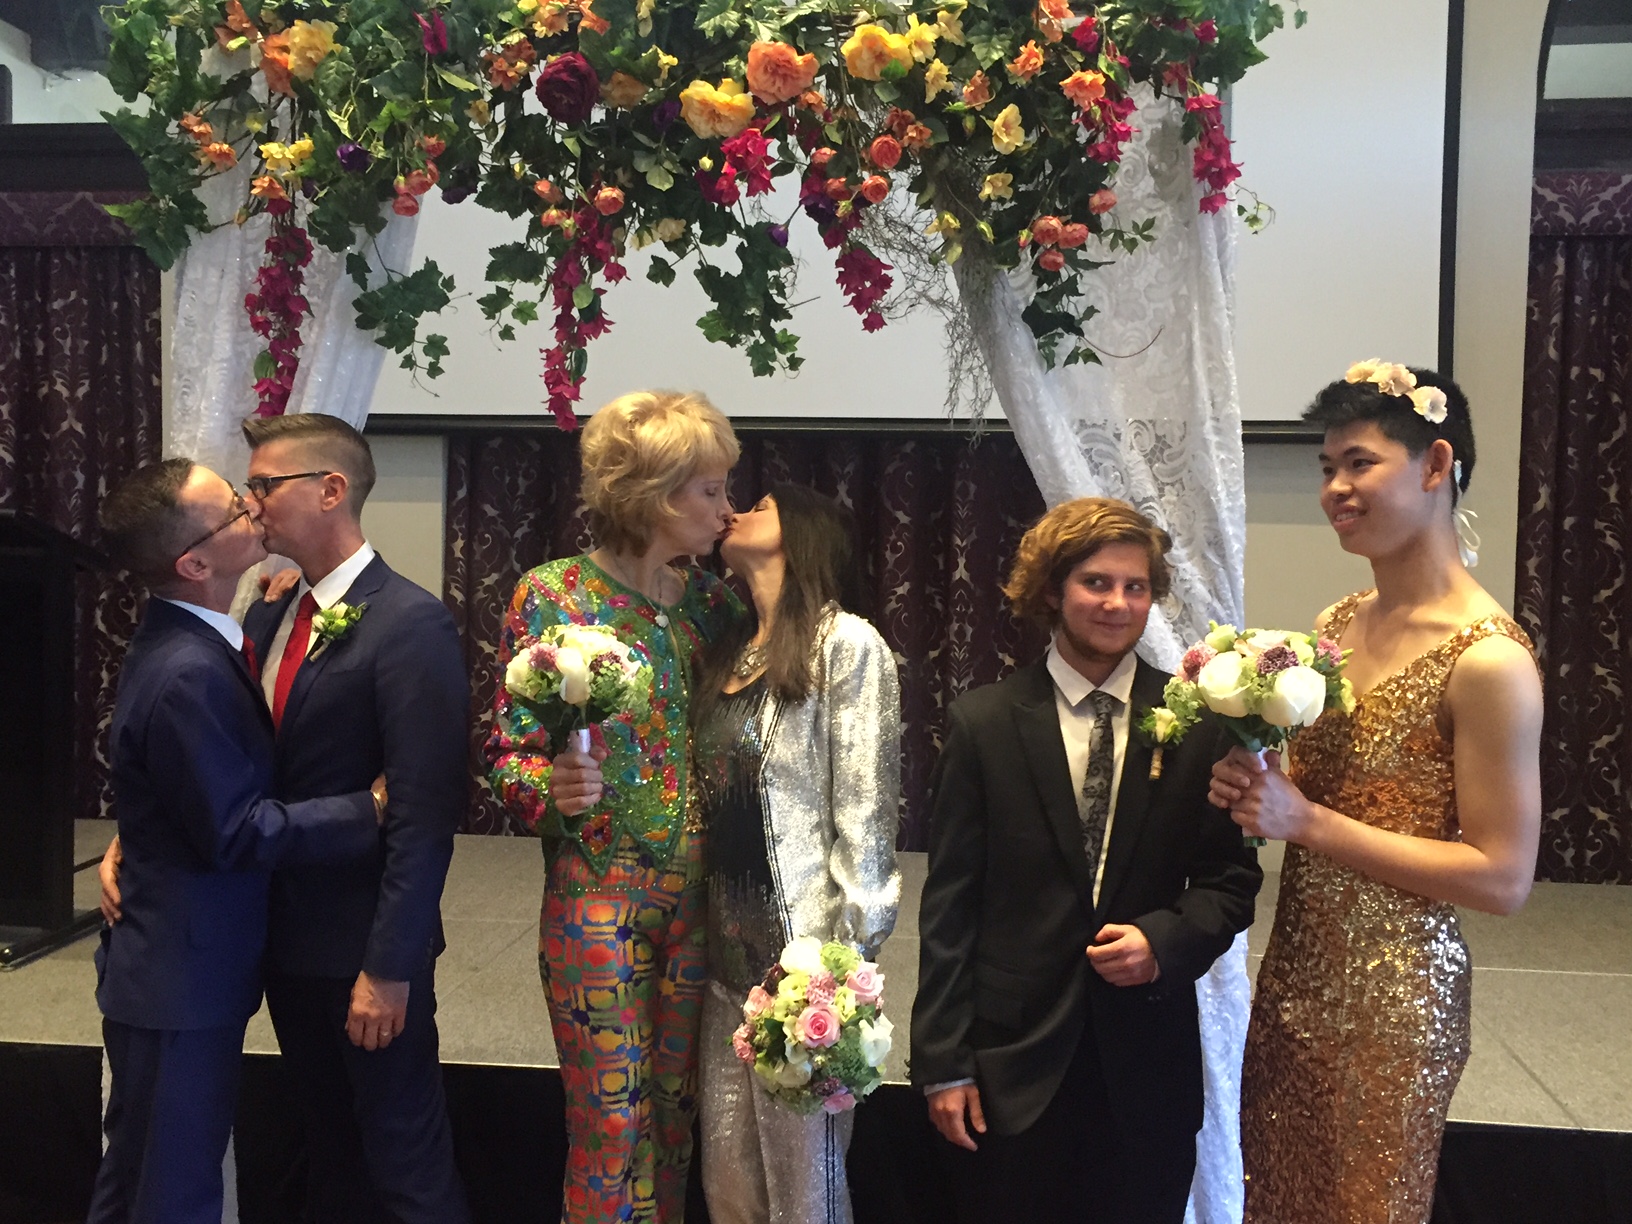 Rainbow Campus at Sydney University hosts ‘wilfully disobedient’ same-sex wedding ceremony